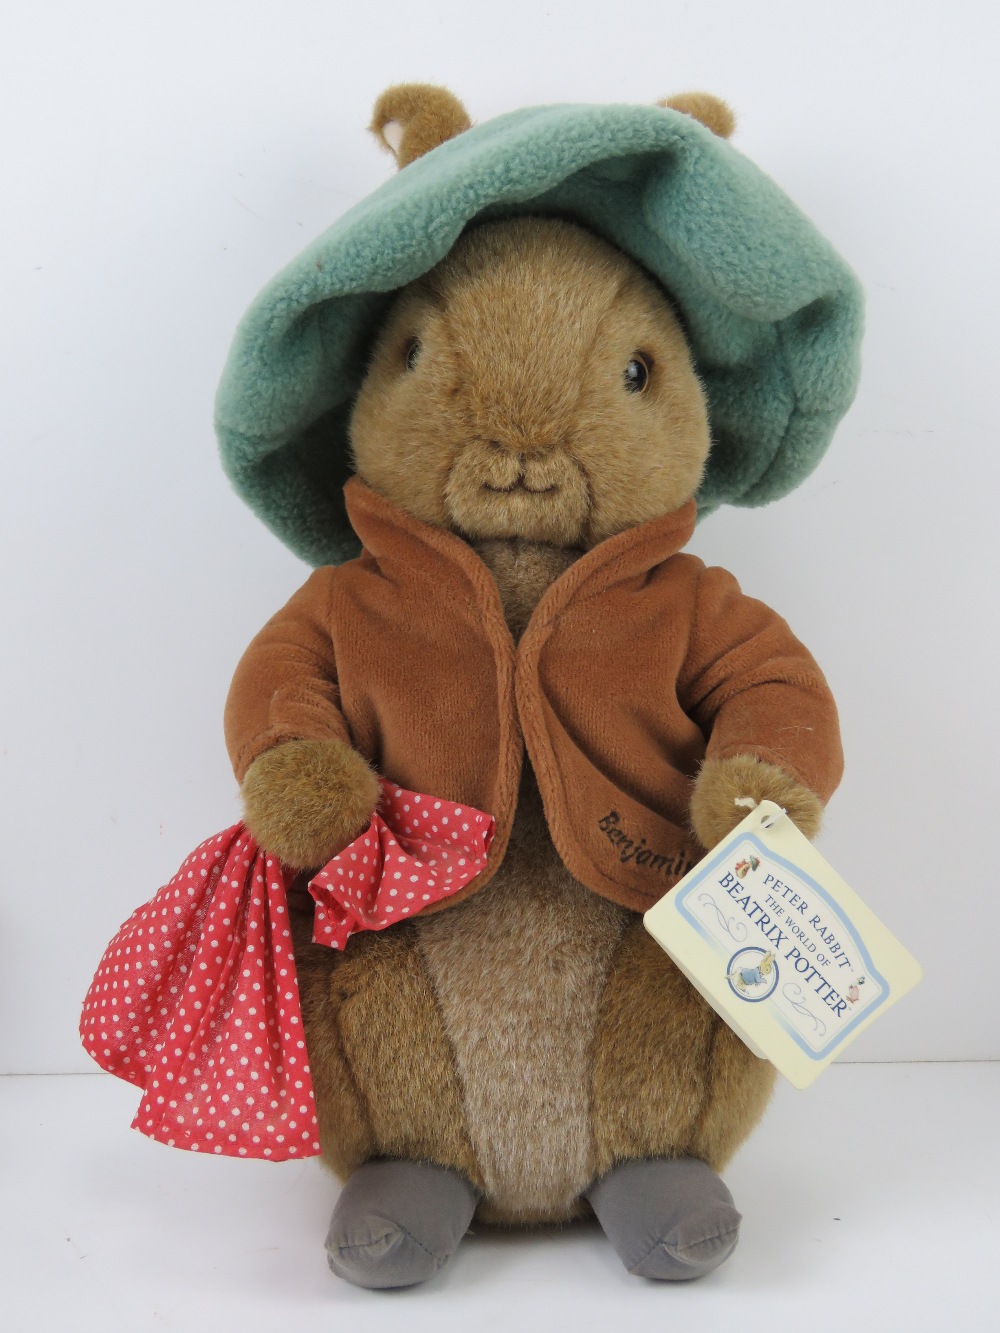 Beatrix Potter World of Peter Rabbit plush toys being; Tom Kitten, Squirrel Nutkin, Benjamin Bunny, - Image 3 of 7